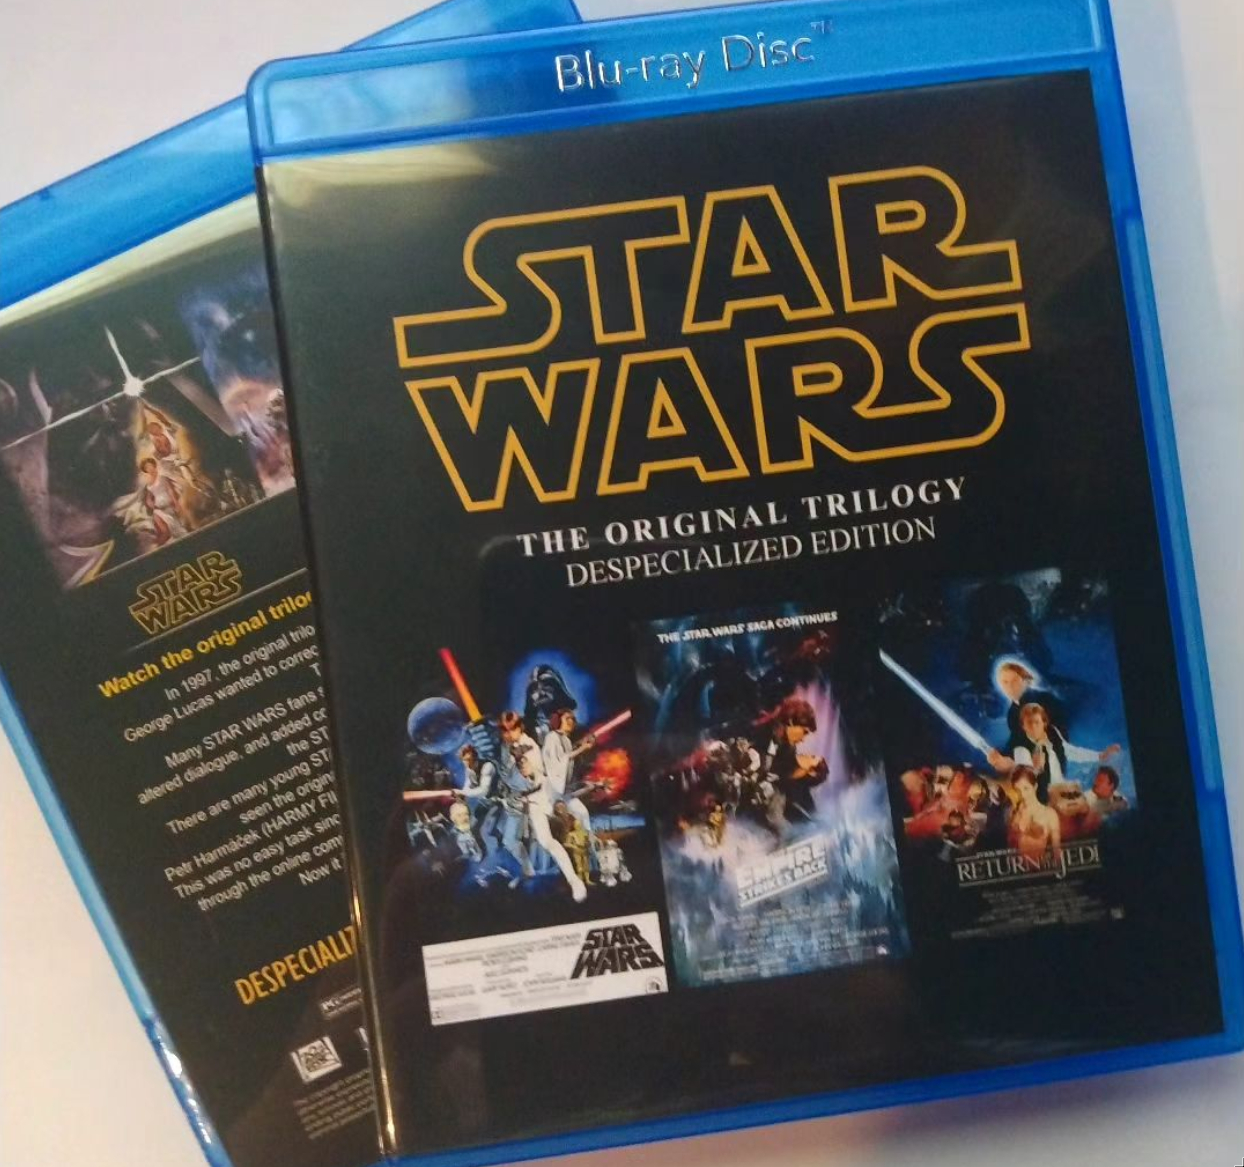 Star Wars - The Original Trilogy (Box Set) (Blu-ray) for sale online